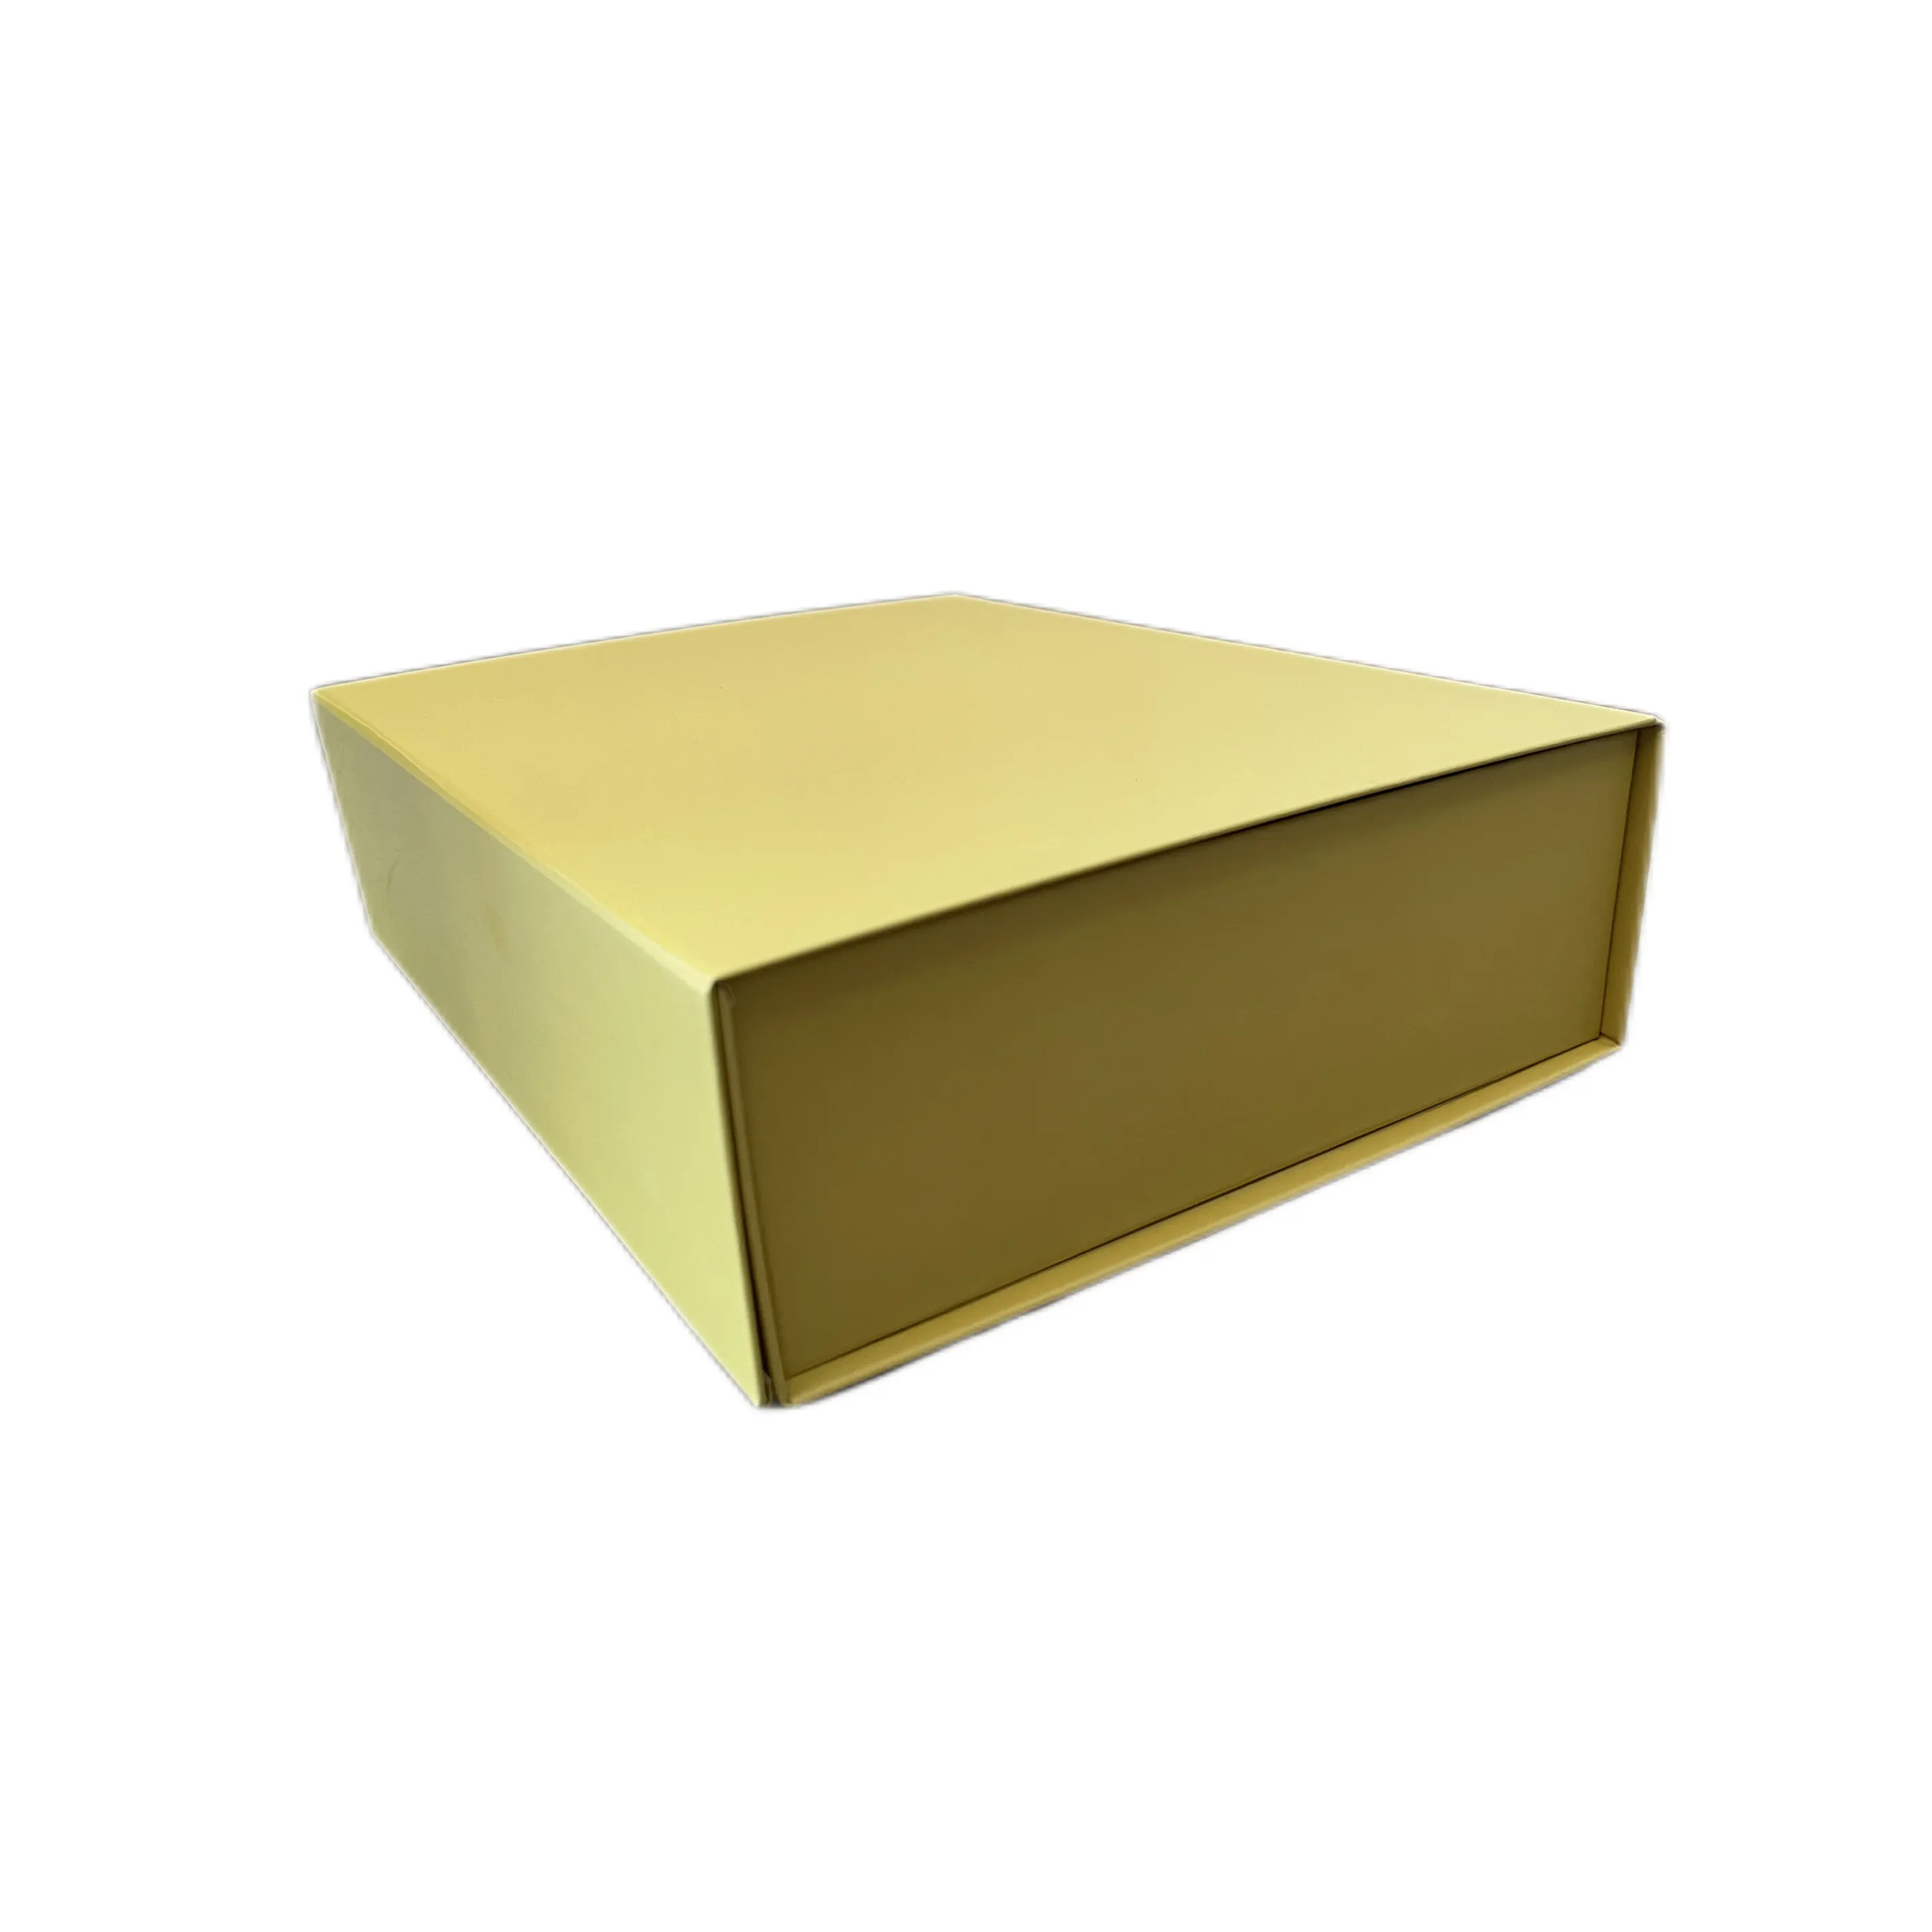 Bestseller Schubladen art Aufbewahrung sbox Papier Desktop Aufbewahrung sbox Schiebe schubladen box